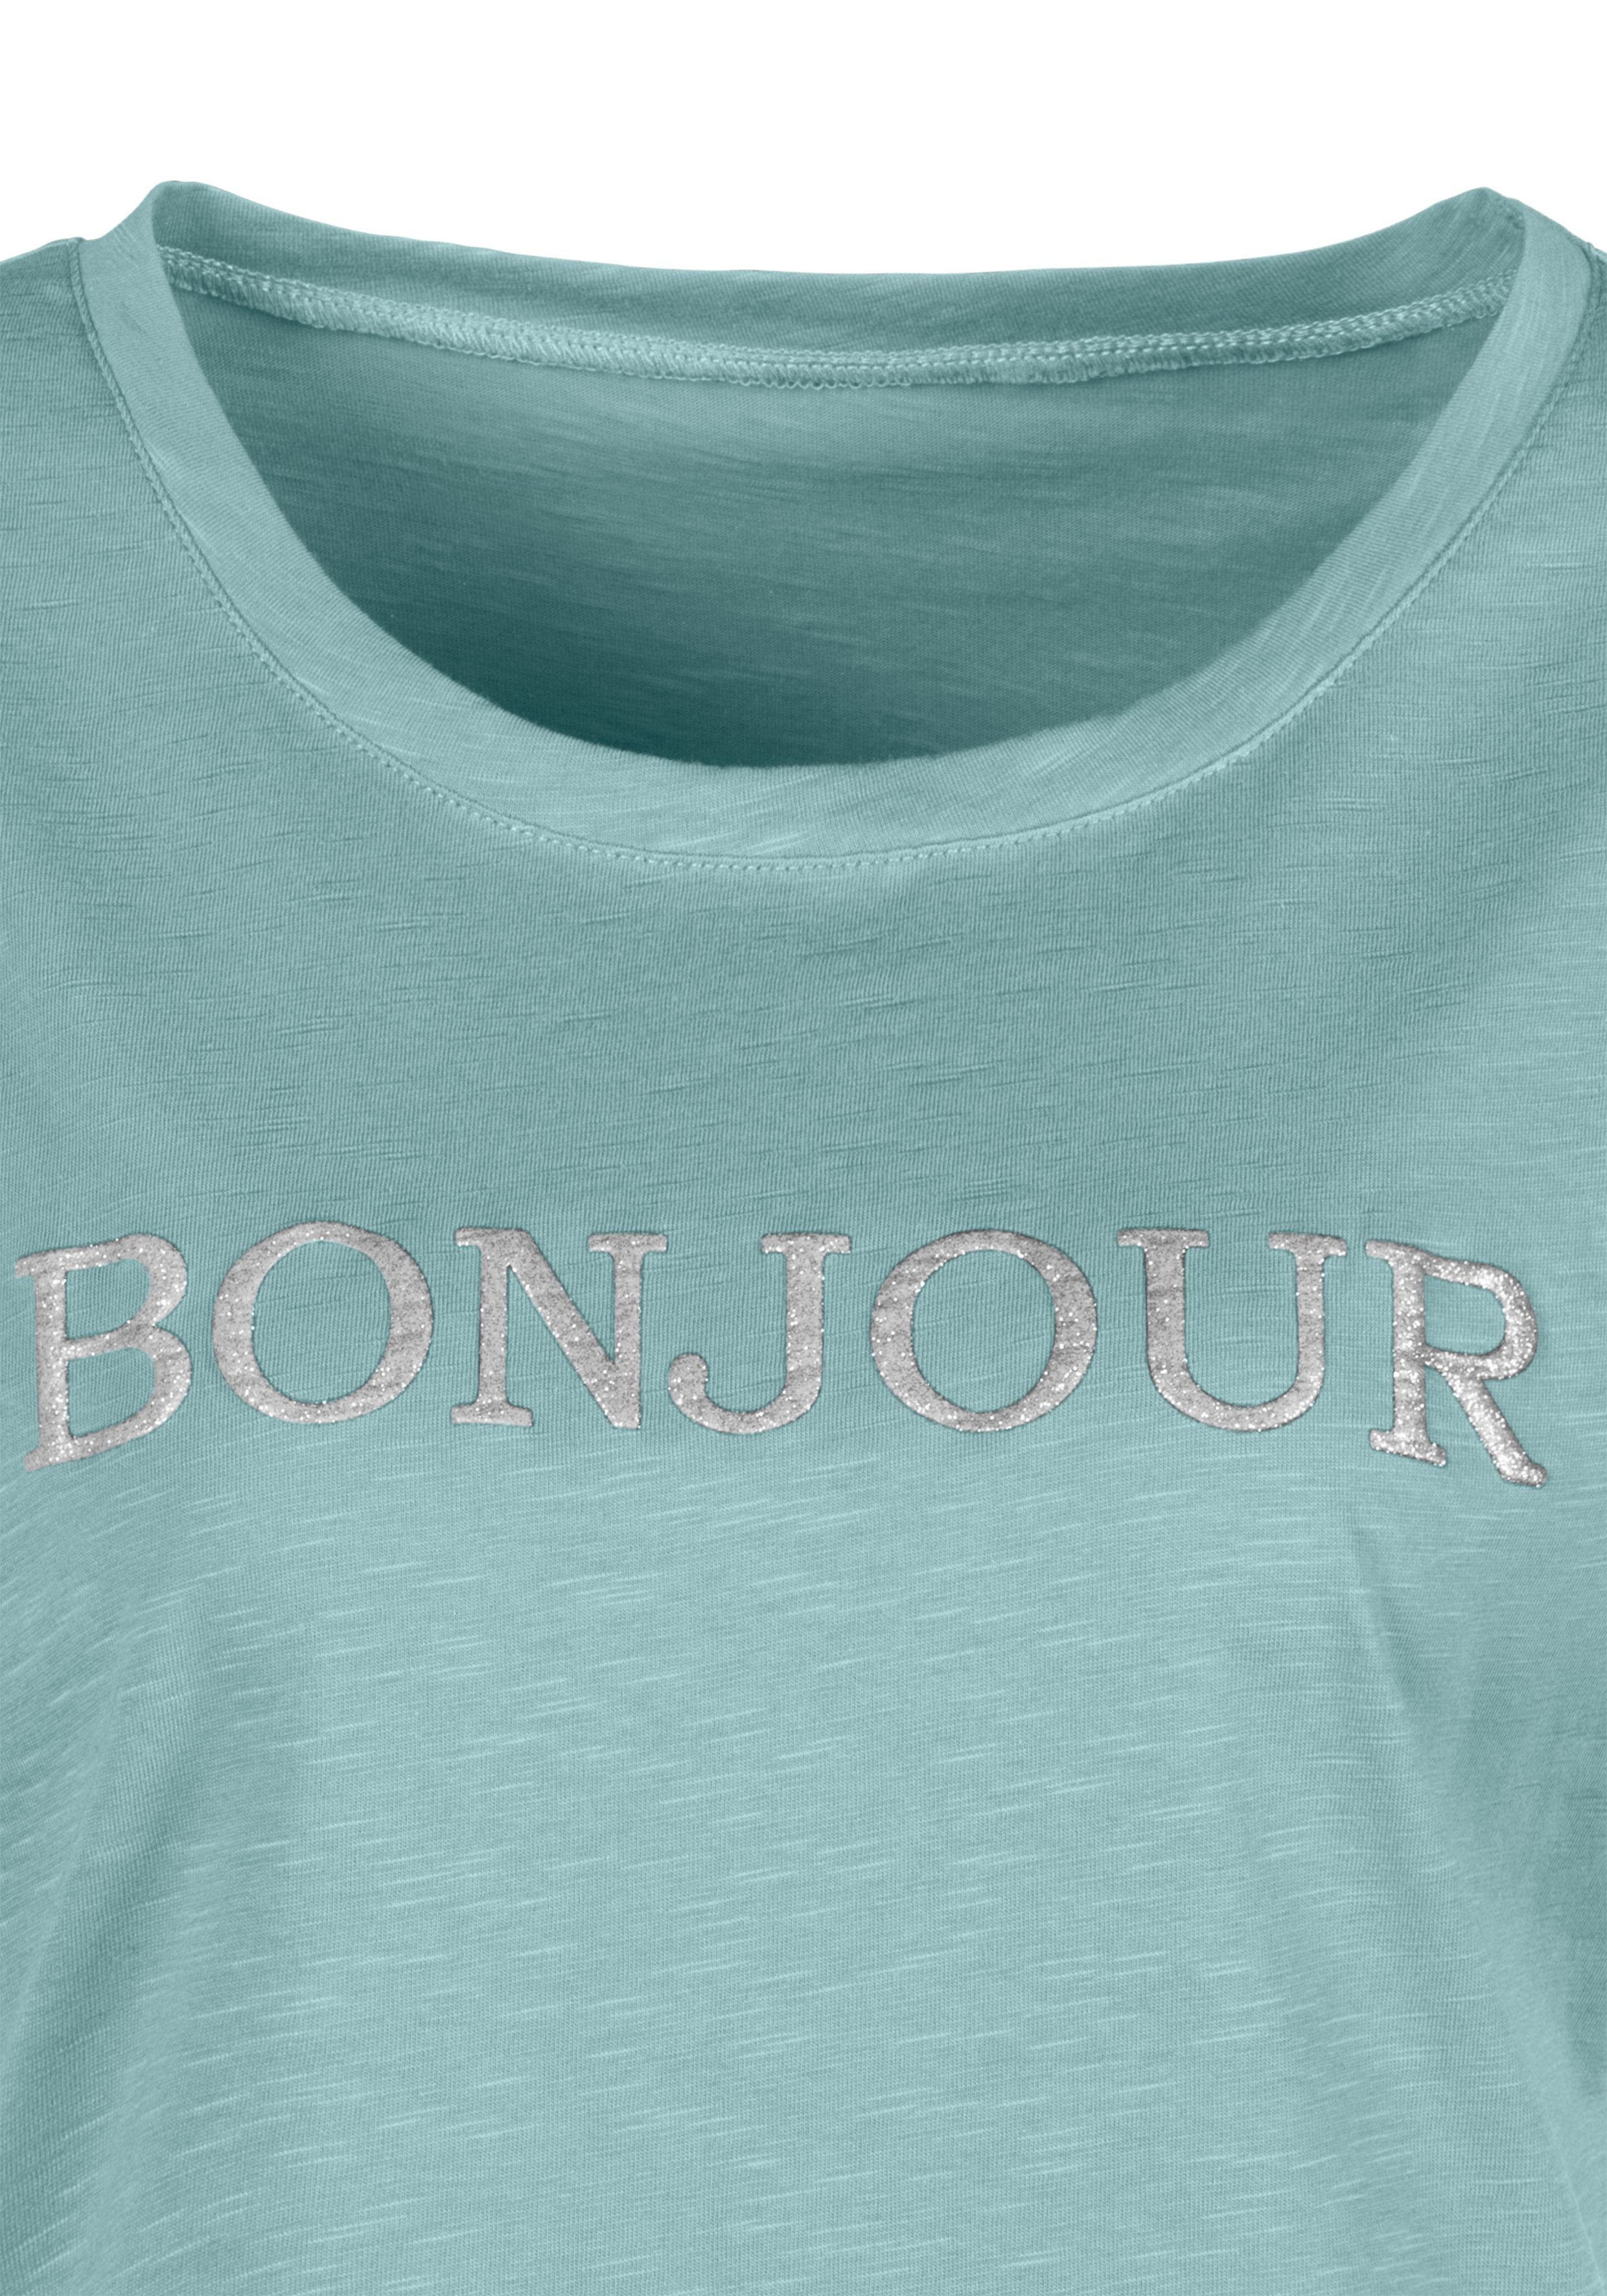 Vivance T-Shirt mit "Bonjour" mint Frontdruck modischem